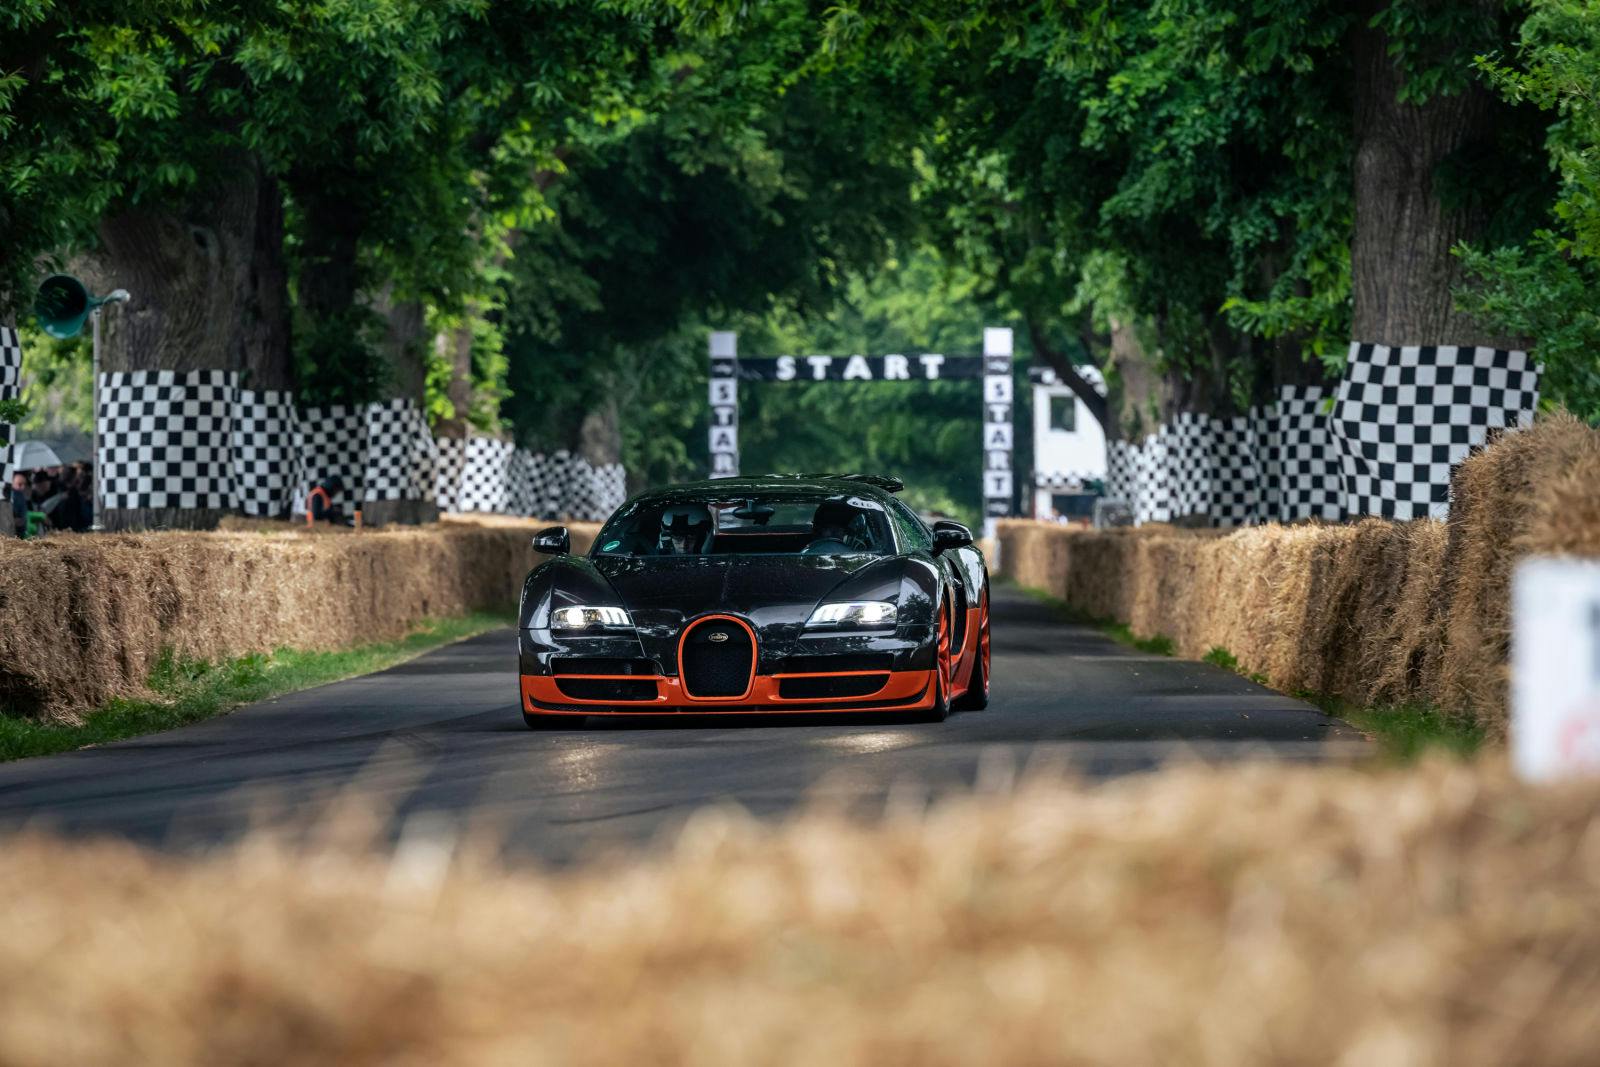 The Veyron 16.4 Super Sport set Bugatti’s first world speed record of 431 km/h. 